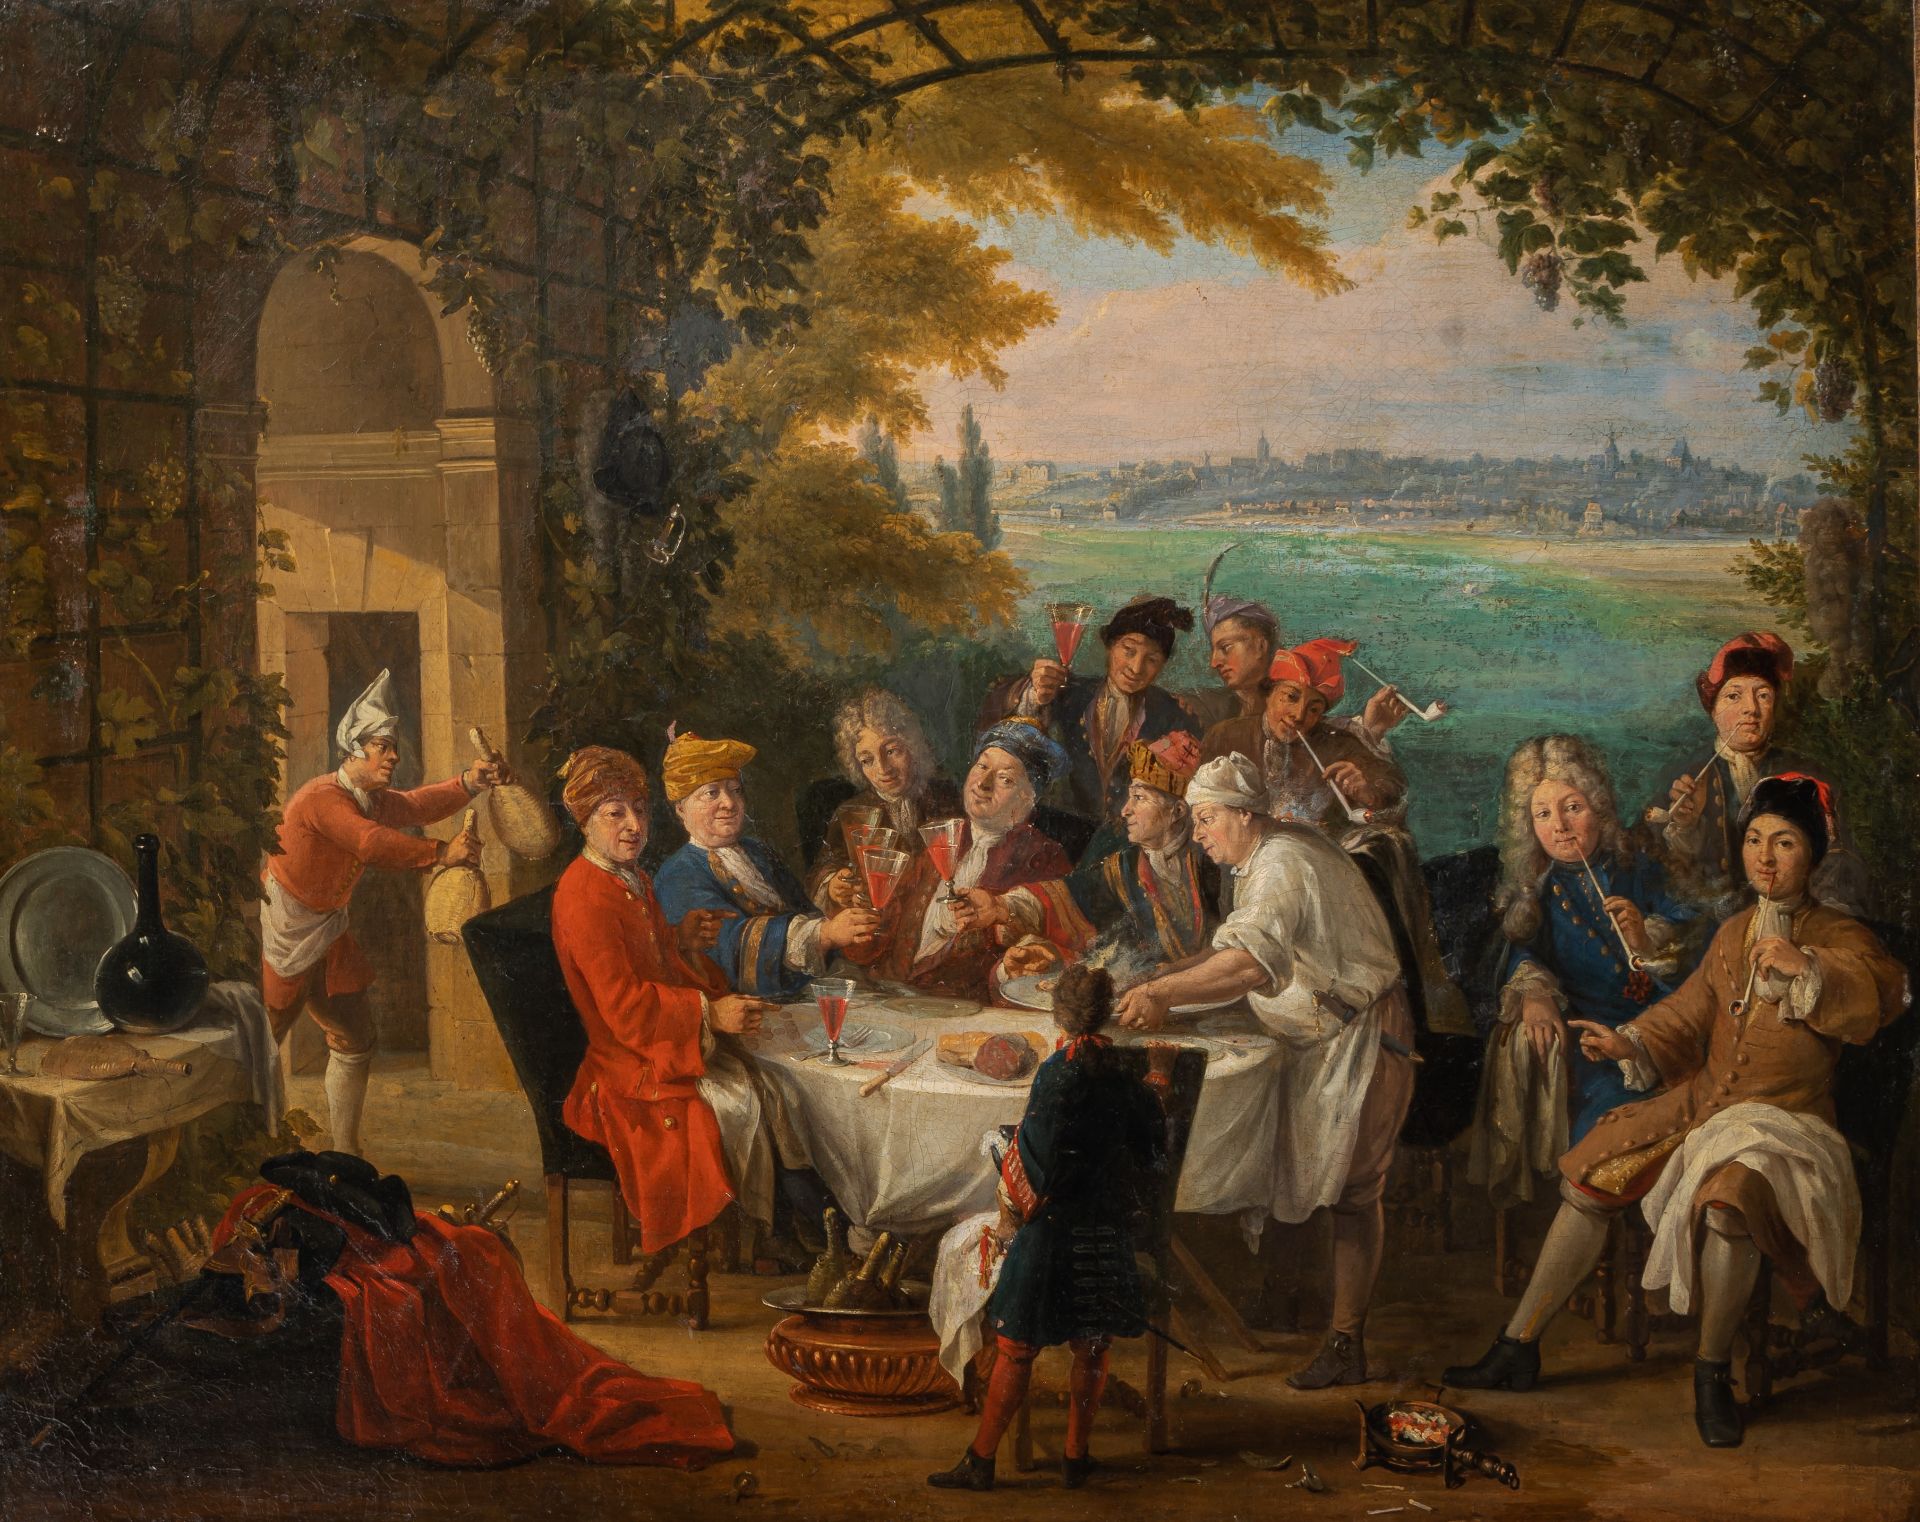 Attrib. to Etienne Jeaurat (1699-1789), the village fair, mid 18thC, oil on canvas, 74 x 92,5 cm